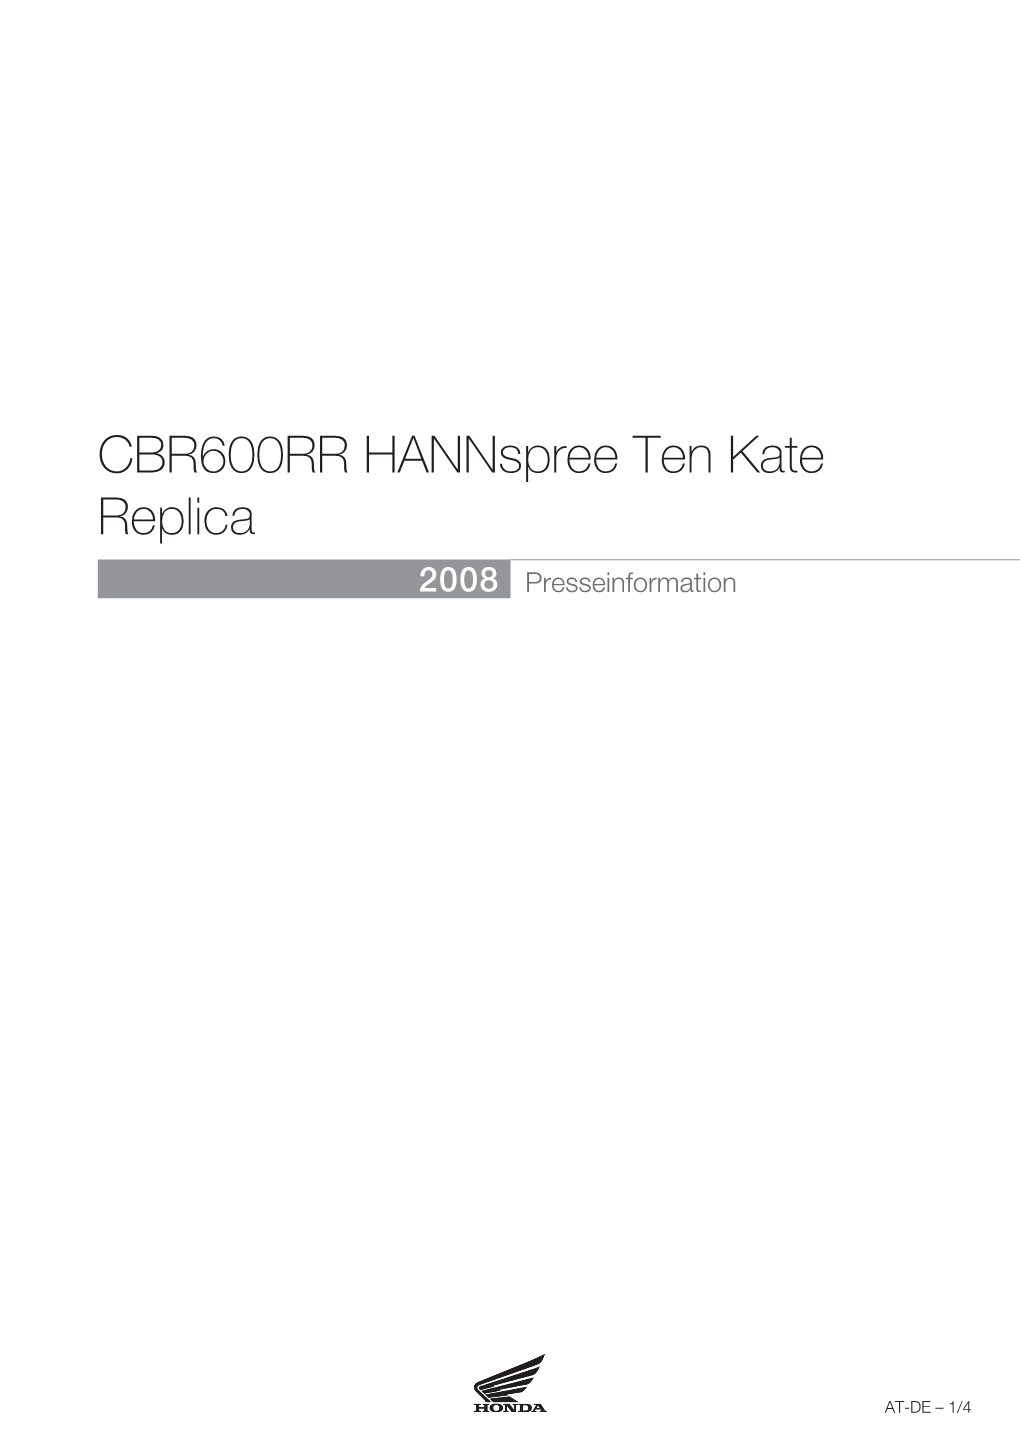 CBR600RR Hannspree Ten Kate Replica 2008 Presseinformation